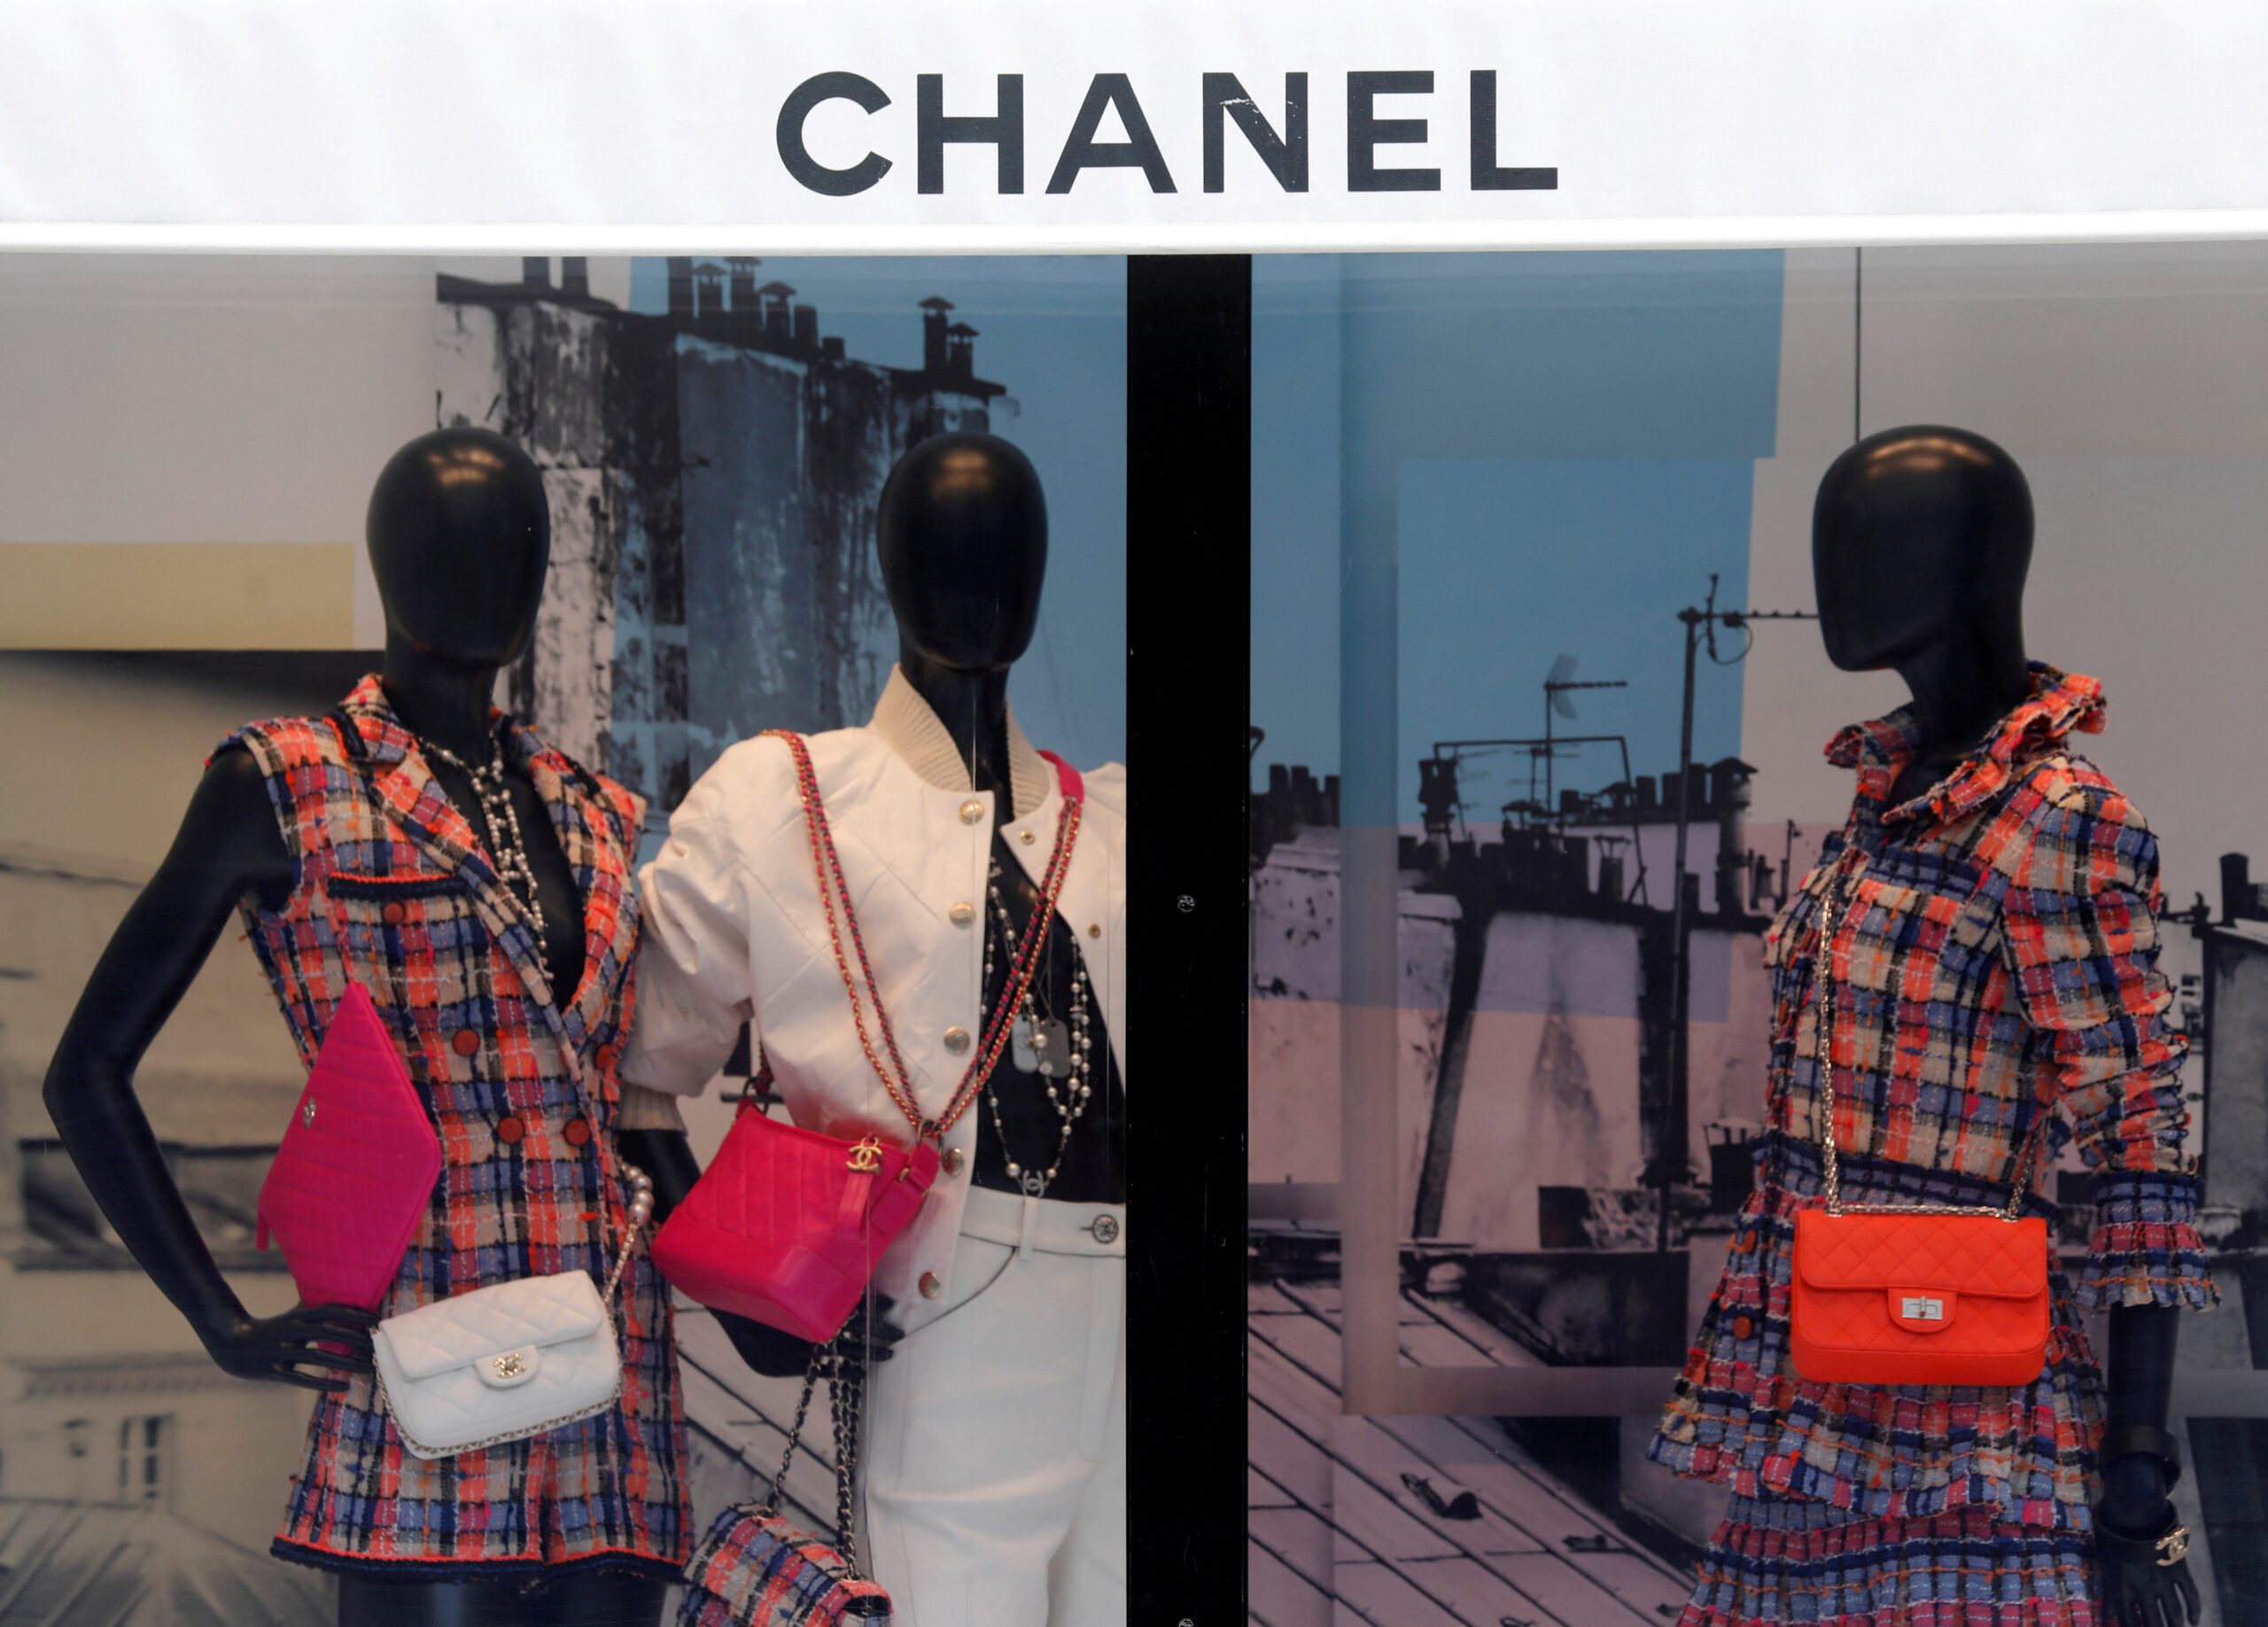 Chanel’s creative director Virginie Viard to leave brand